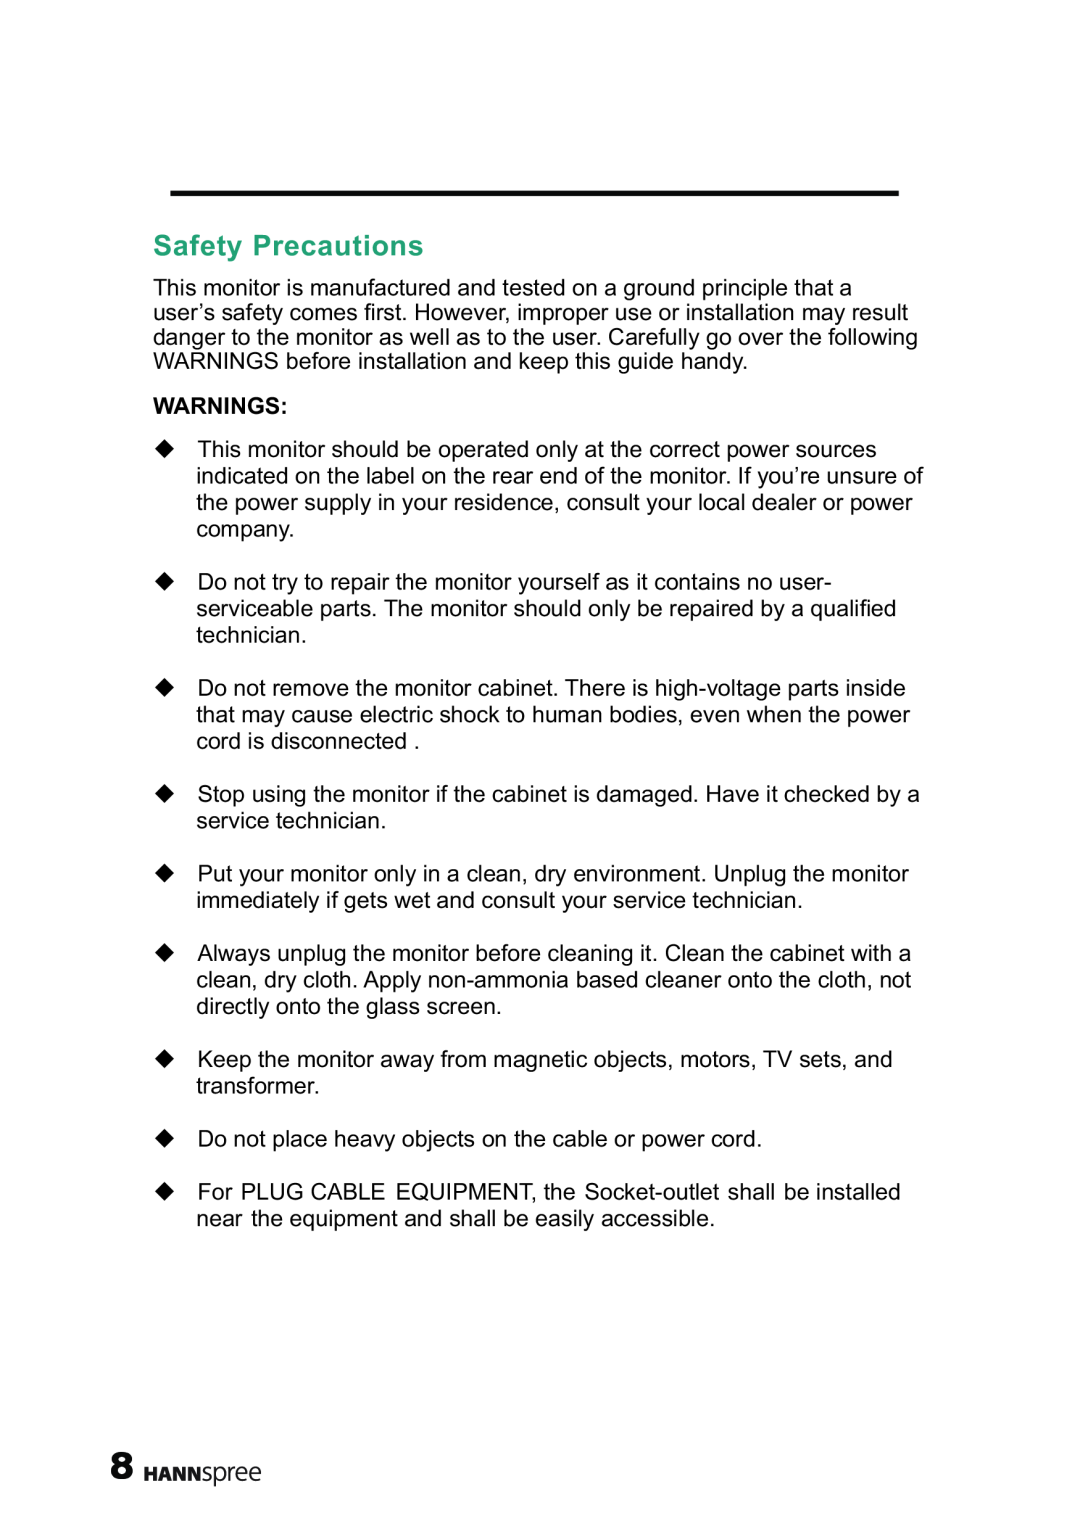 HANNspree XM manual Safety Precautions, Warnings 